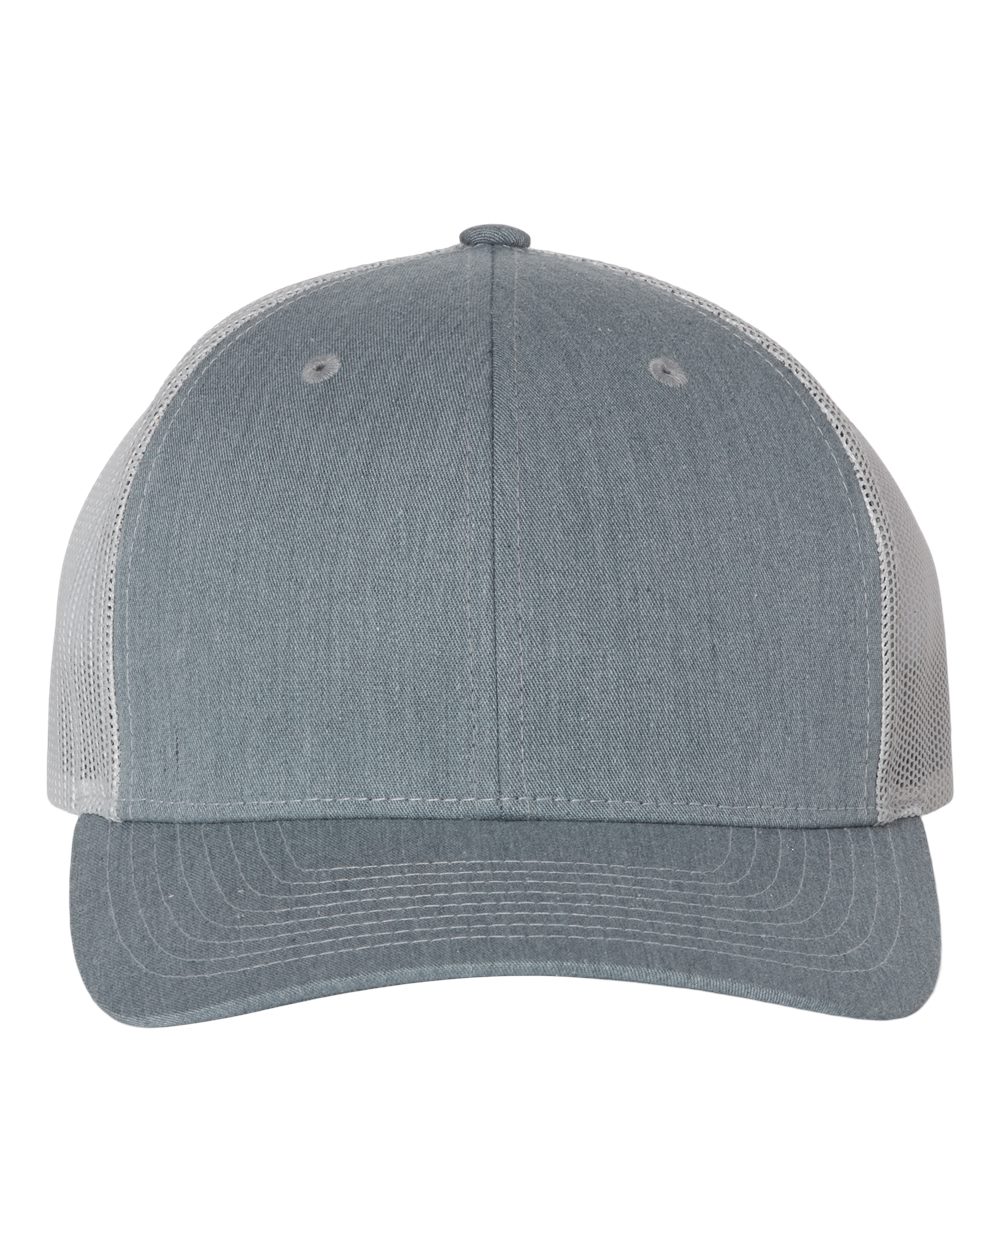 Richardson Snapback Trucker Hat (112) in Heather Grey/Light Grey